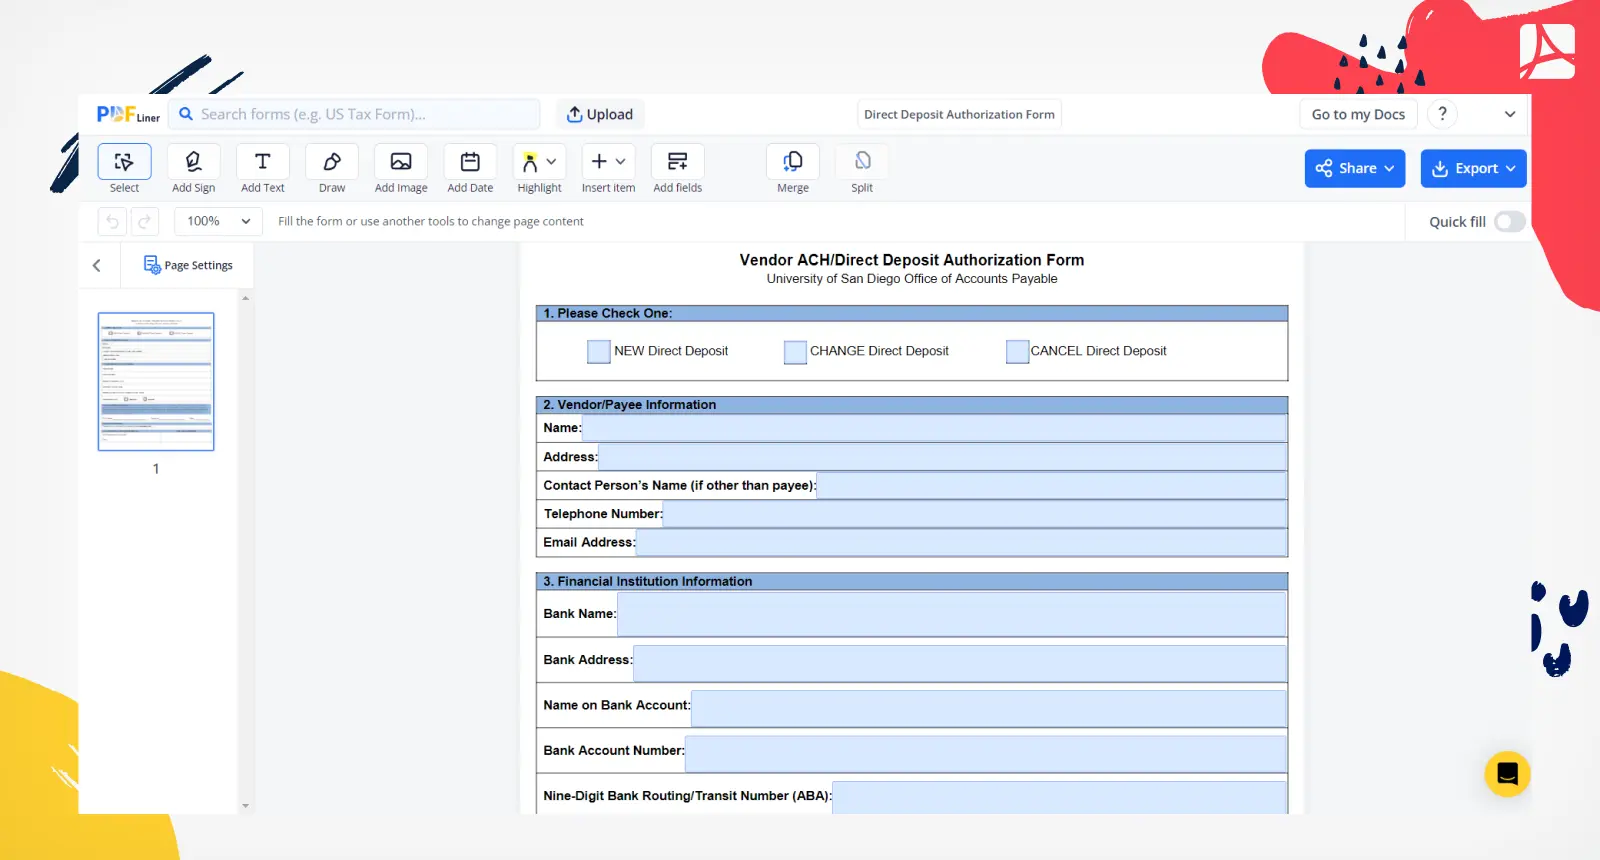 Direct Deposit Authorization Form Screenshot